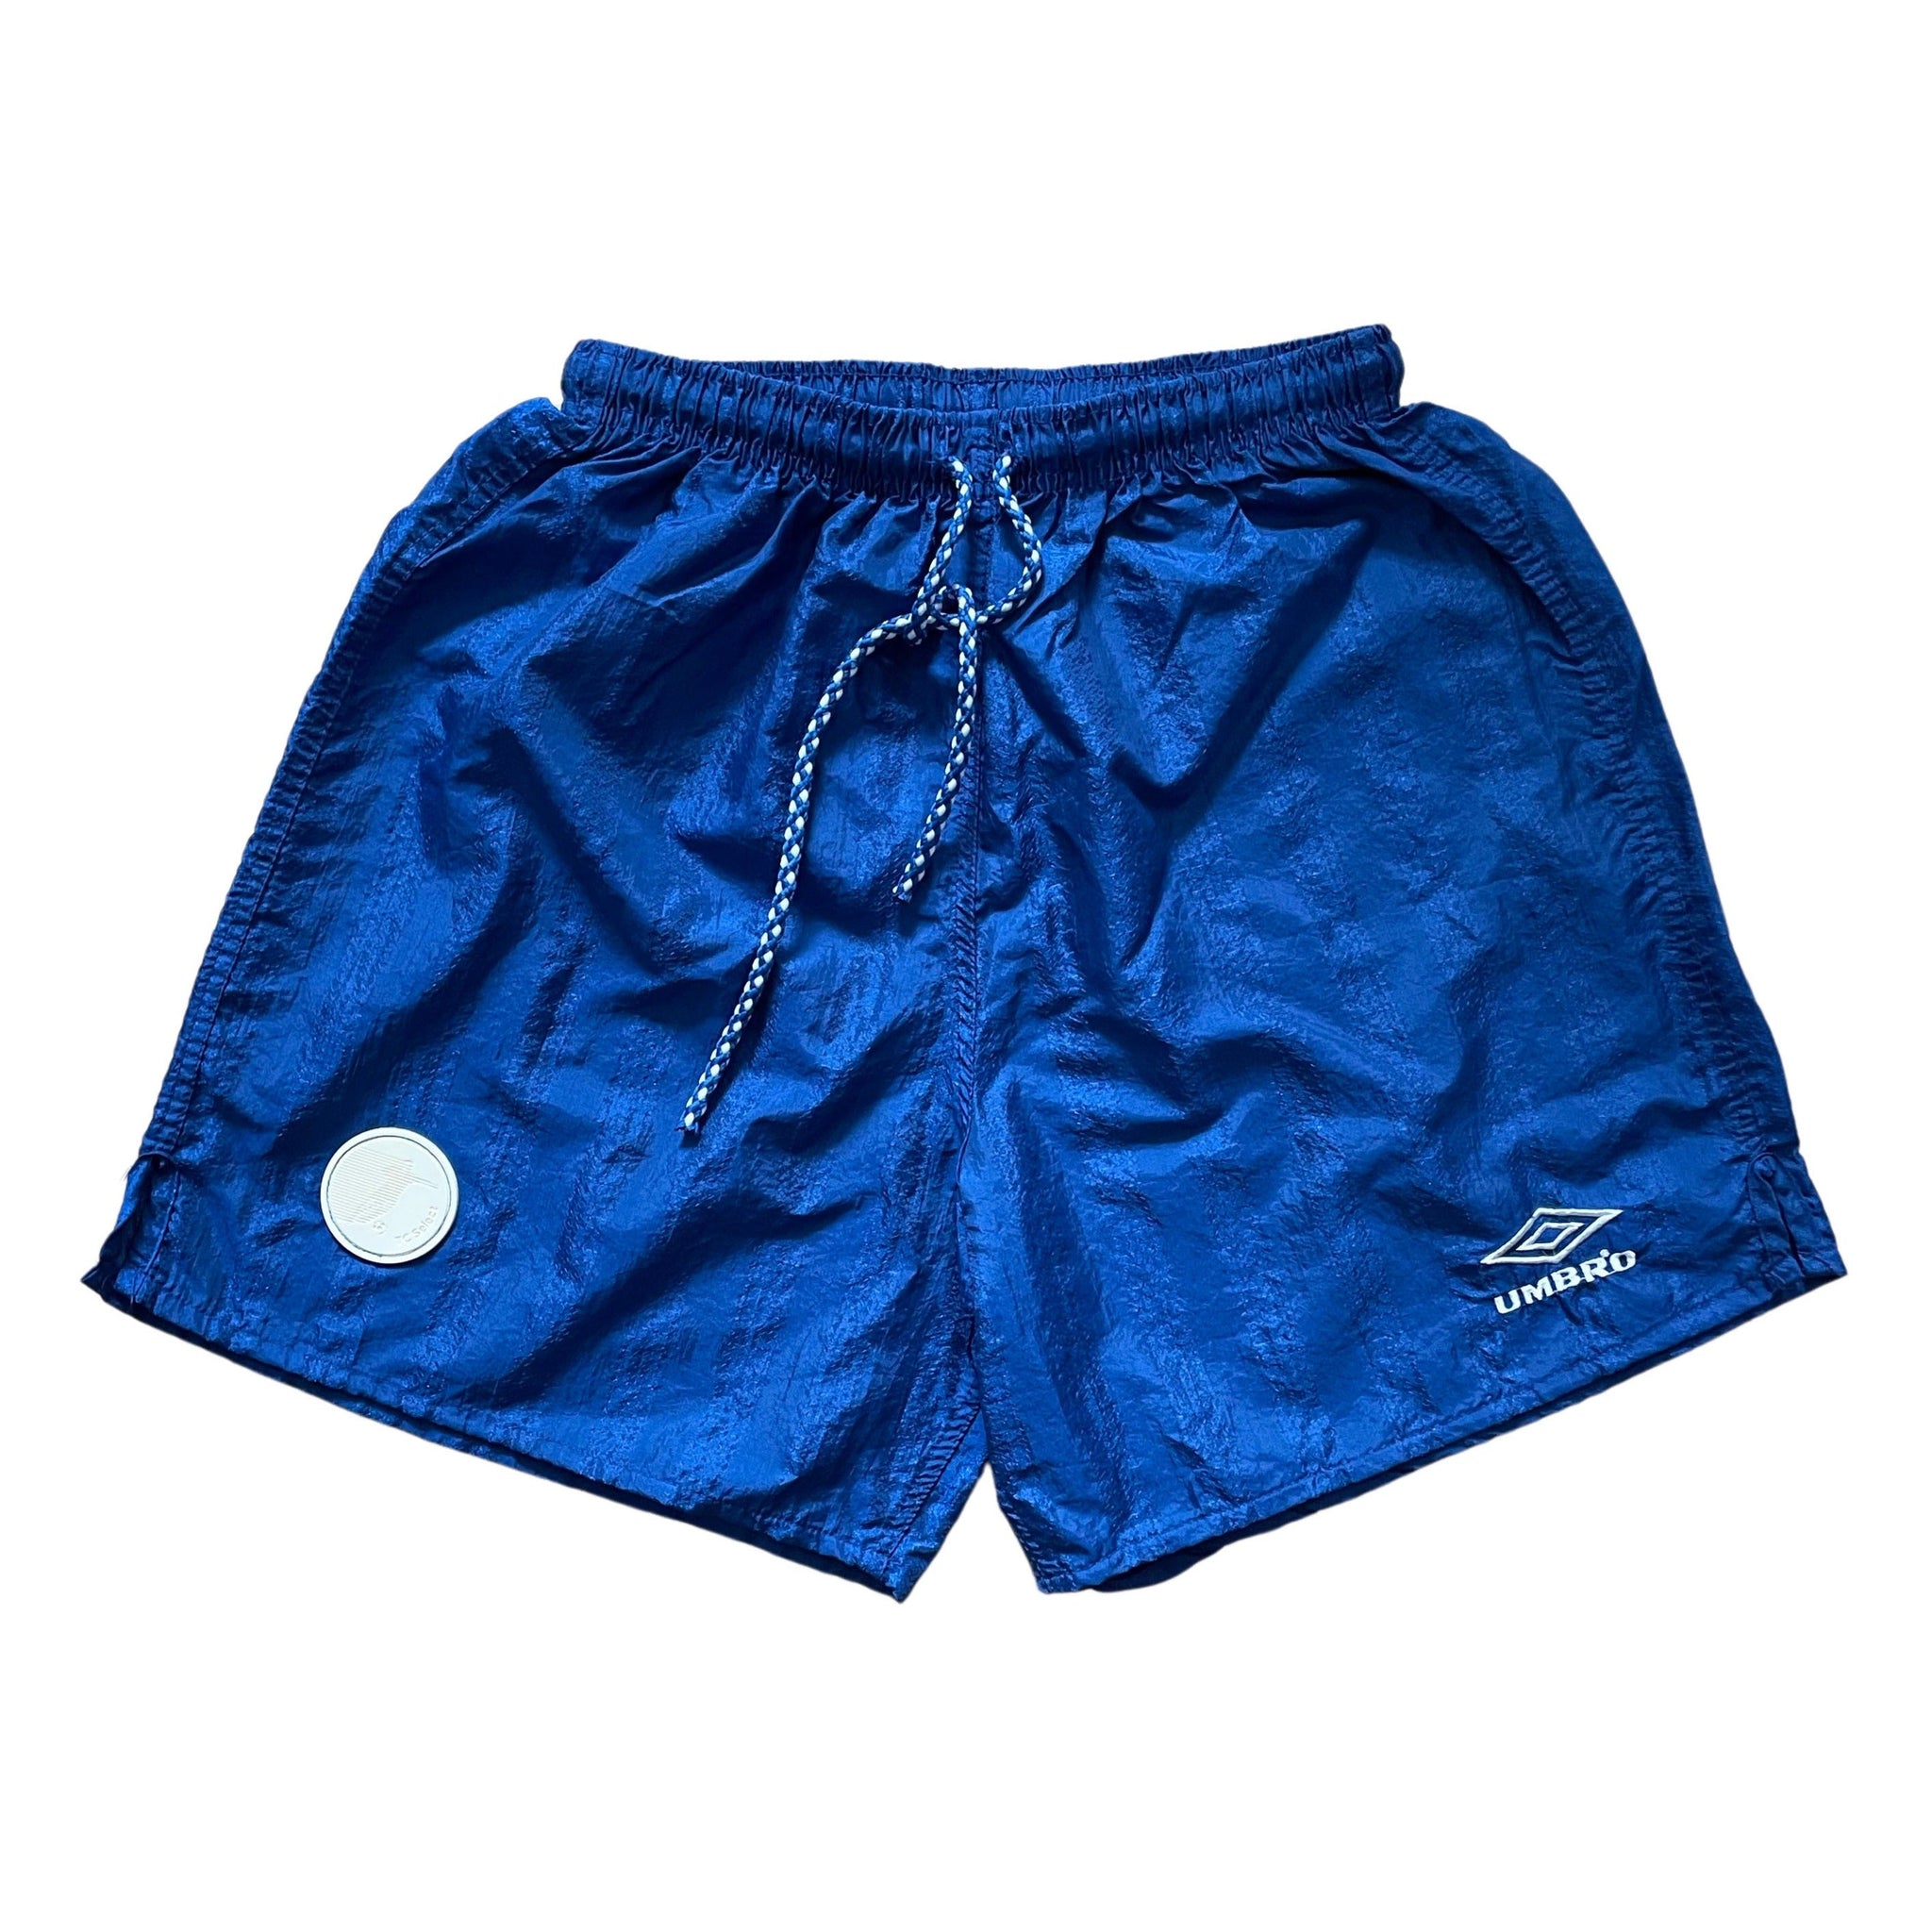 Umbro Nylon Shorts - M